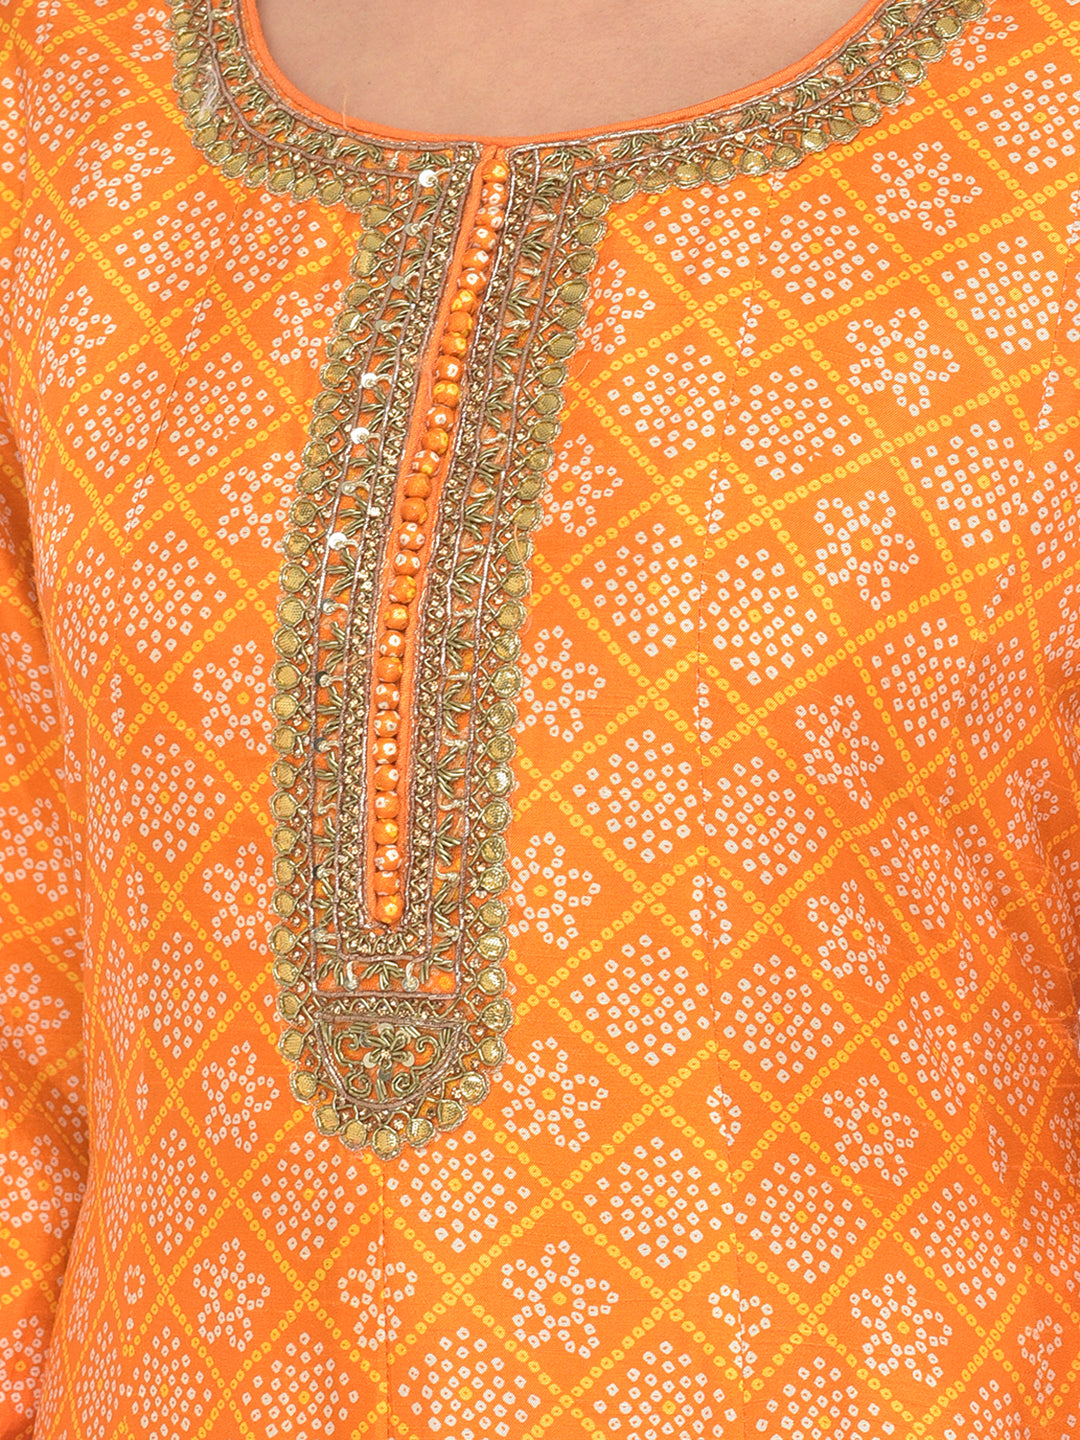 Neeru's mustard color silk fabric salwar kameez